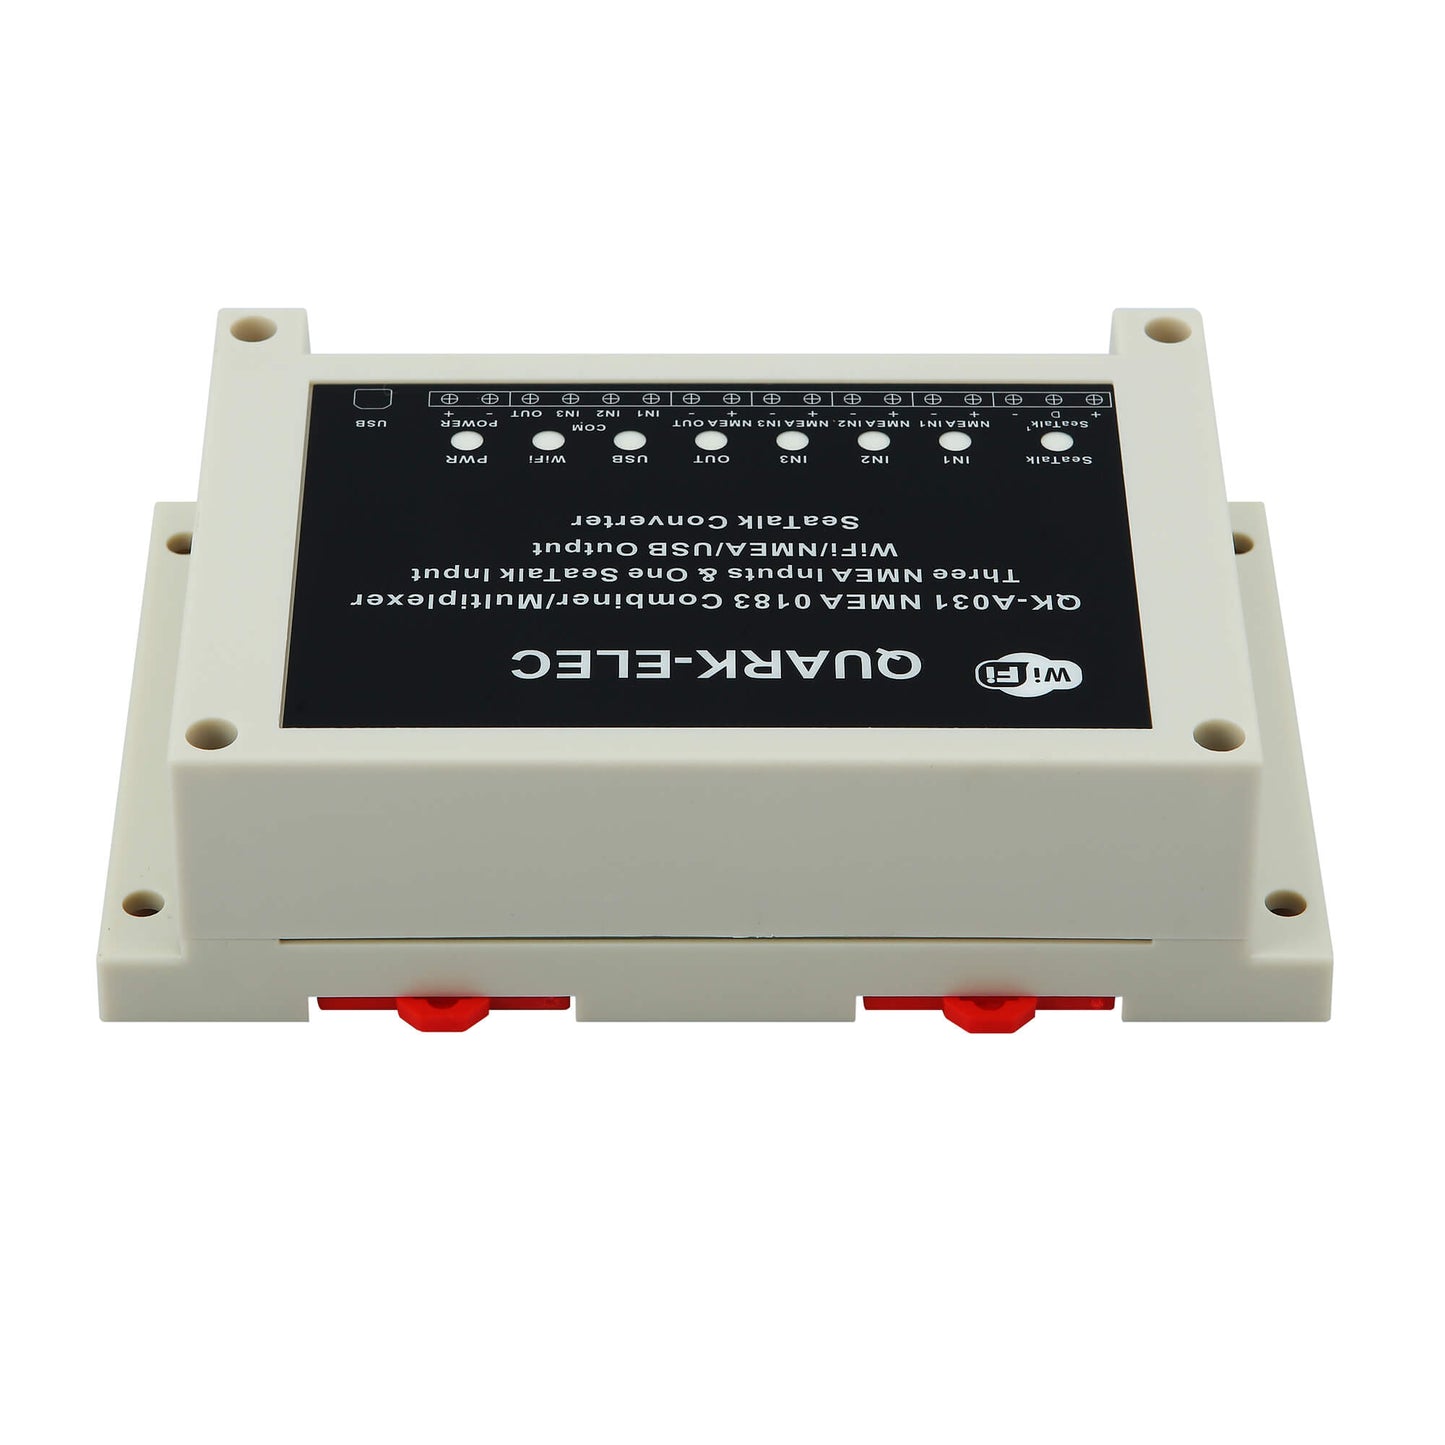 Quark-Elec NMEA 0183 Multiplexer with SeaTalk Converter - QK-A031